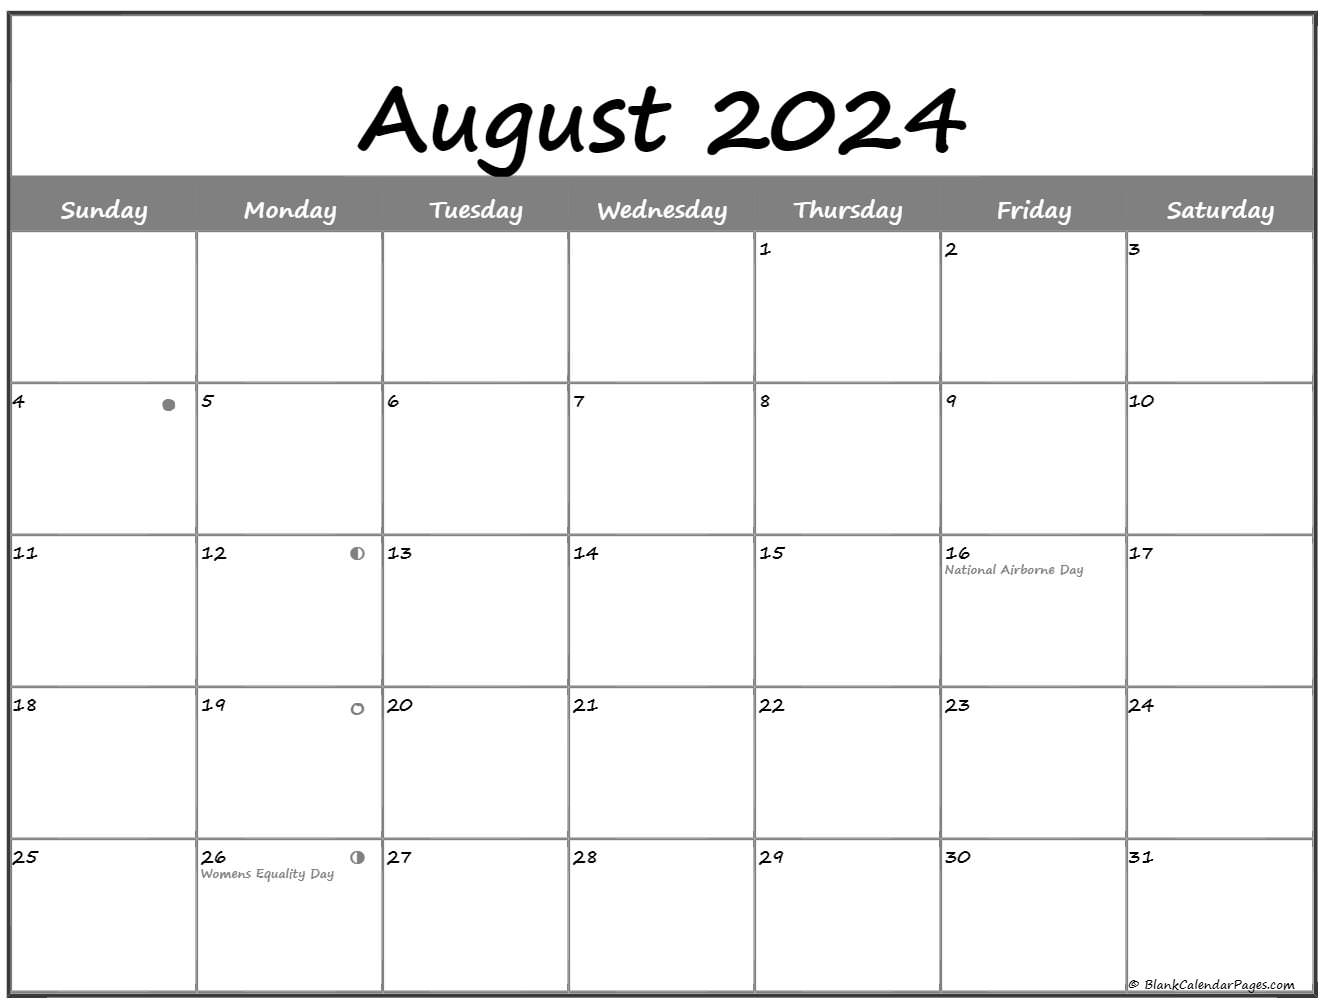 August 2024 Lunar Calendar | Moon Phase Calendar in Free Printable August Lunar Calendar 2024